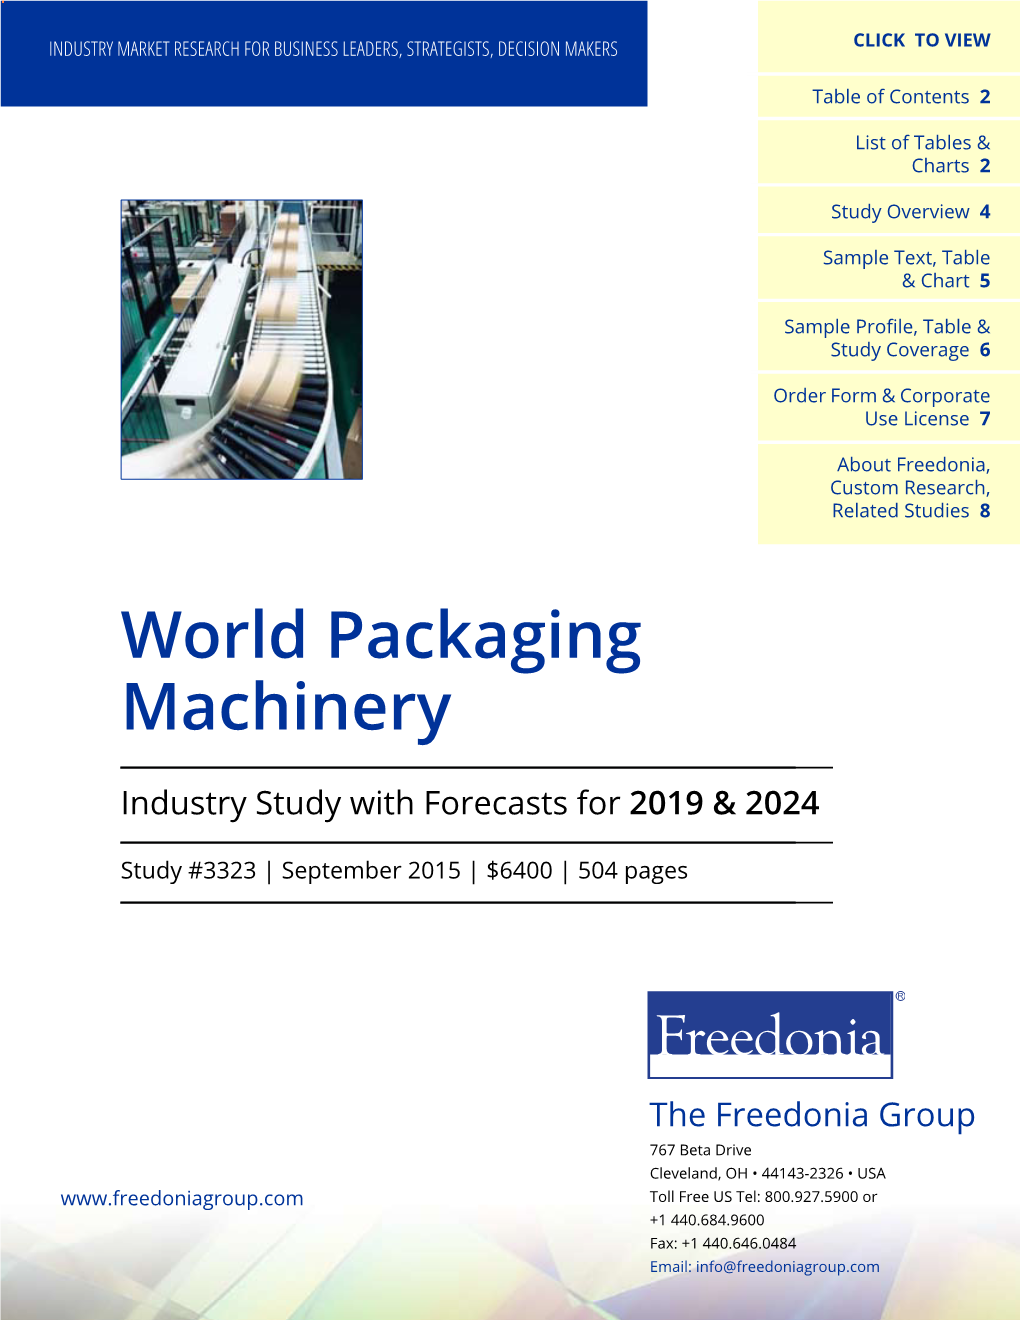 World Packaging Machinery